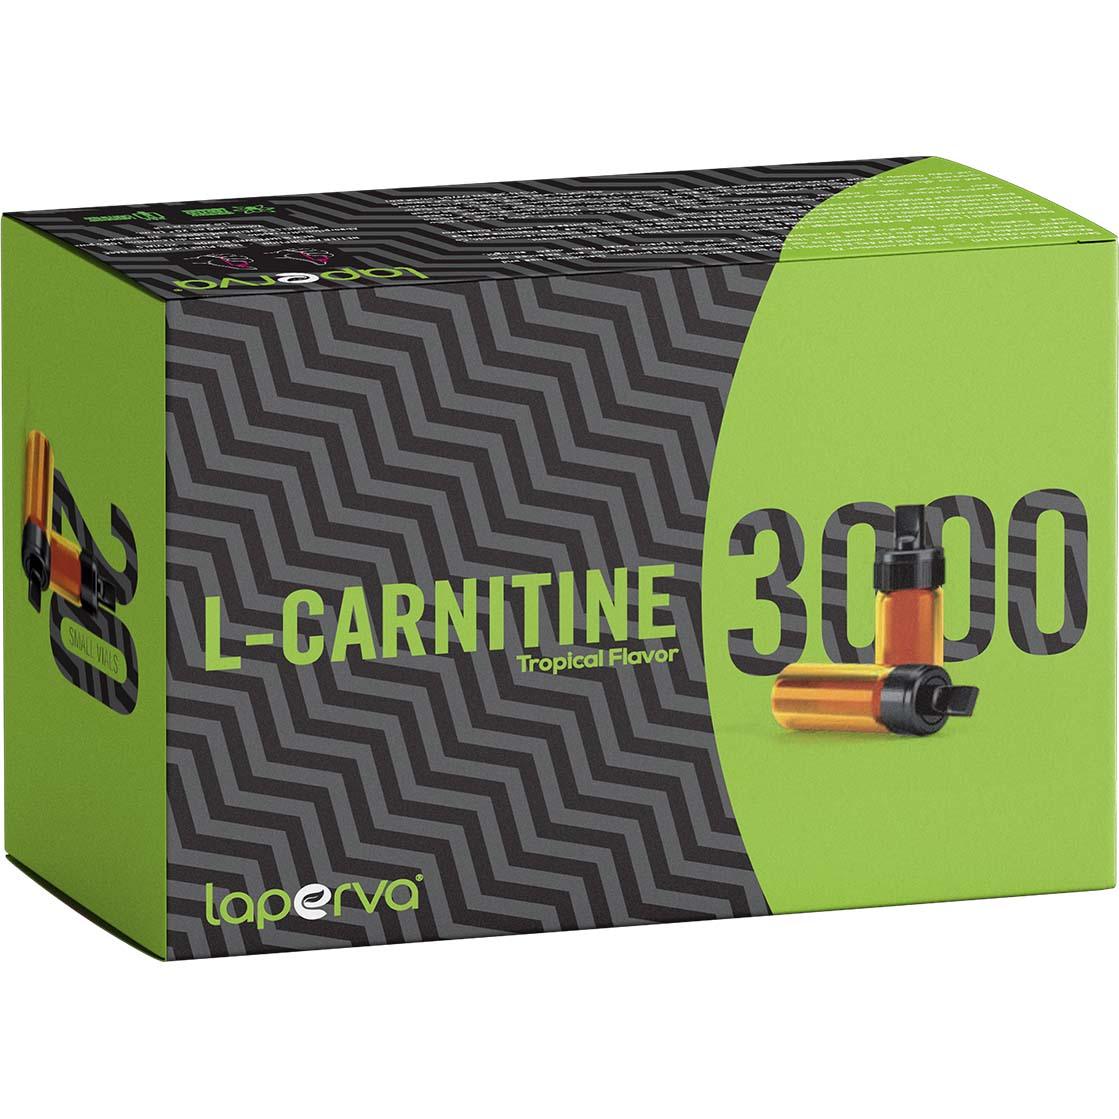 Laperva L Carnitine 3000, 20 Vials - Wellness Shoppee